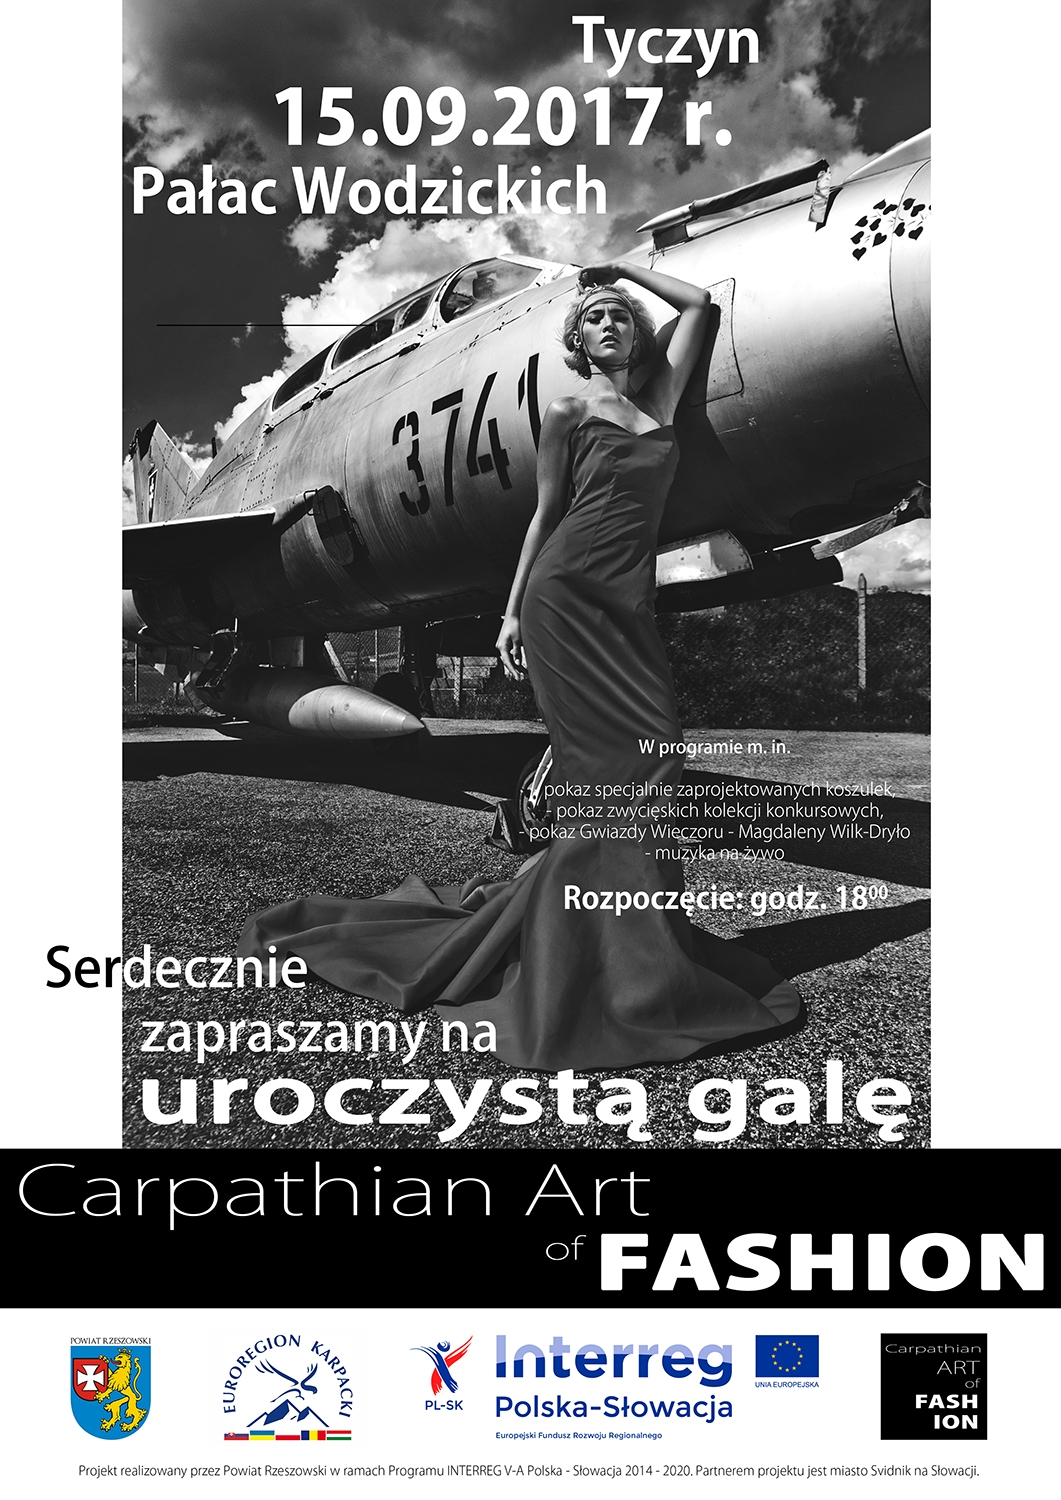 https://powiat.rzeszowski.pl/blog/2017/09/07/uroczysta-gala-carpathian-art-of-fashion/plakat-caf-gala-jpg/